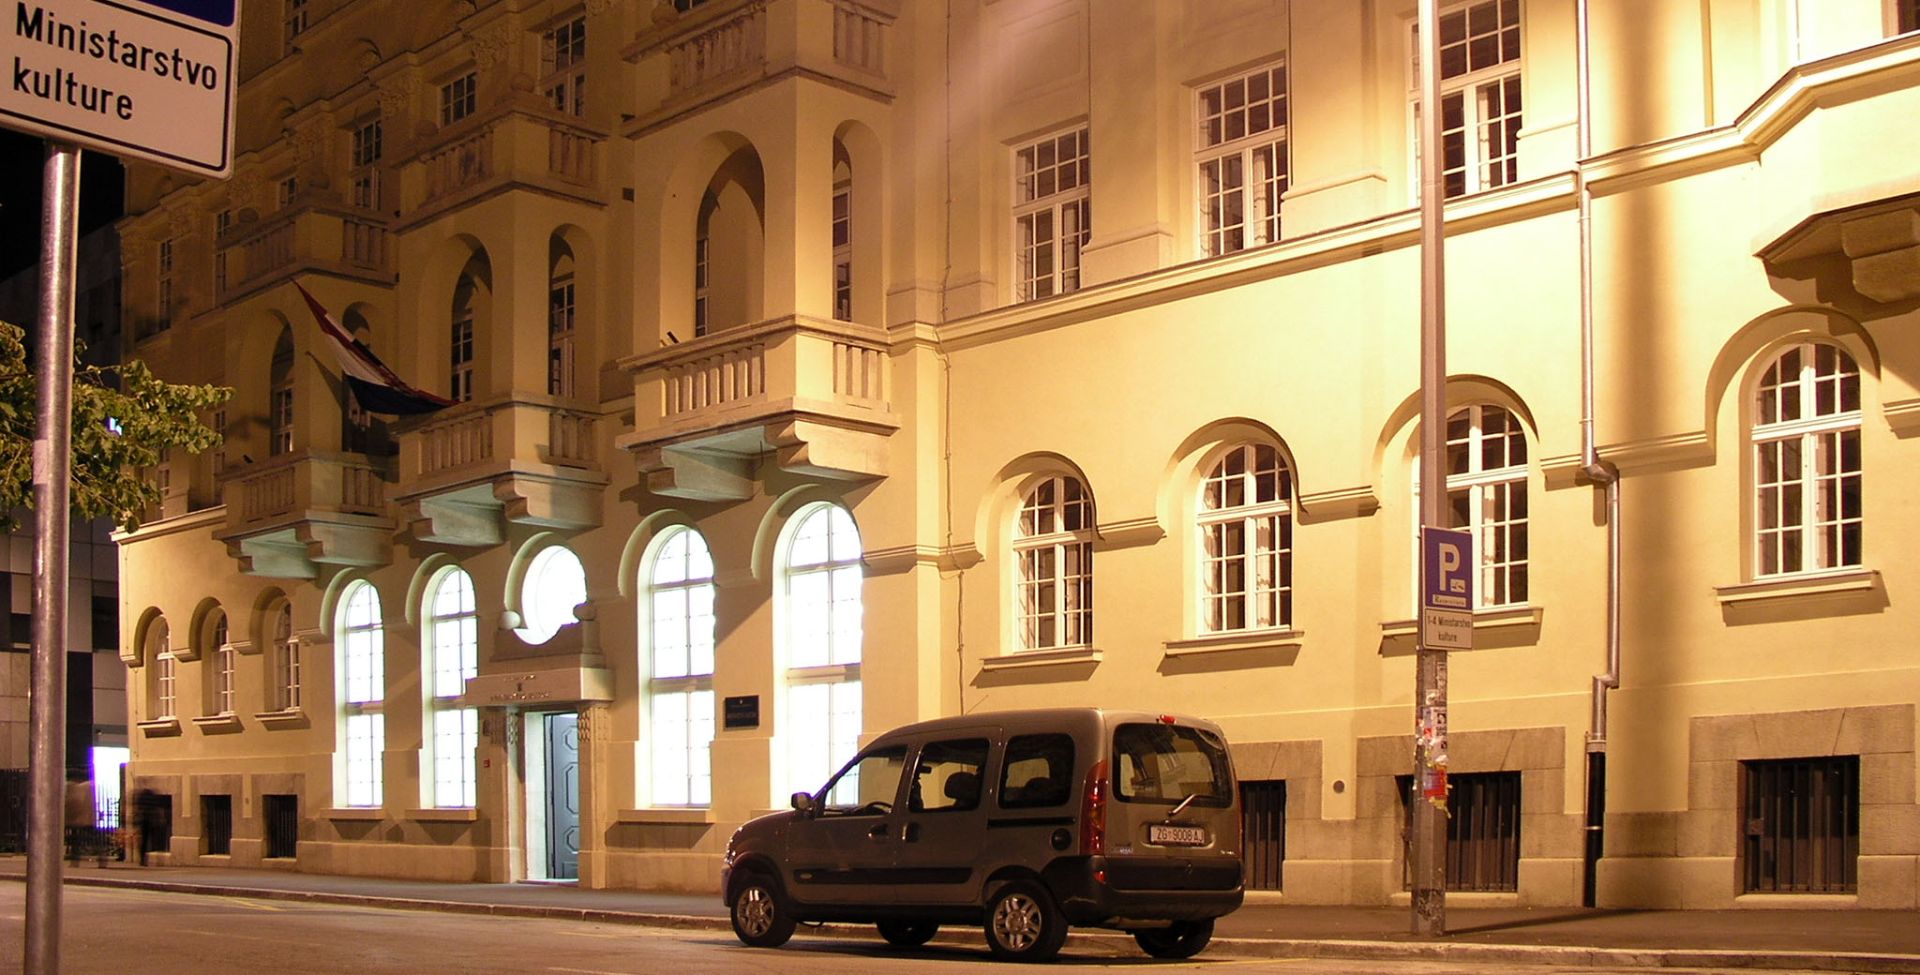 Zagreb, 30.09.2003 - Zgrada Ministarstva kulture u Runjaninovoj ulici u Zagrebu.
foto FaH/ Damir SENÈAR